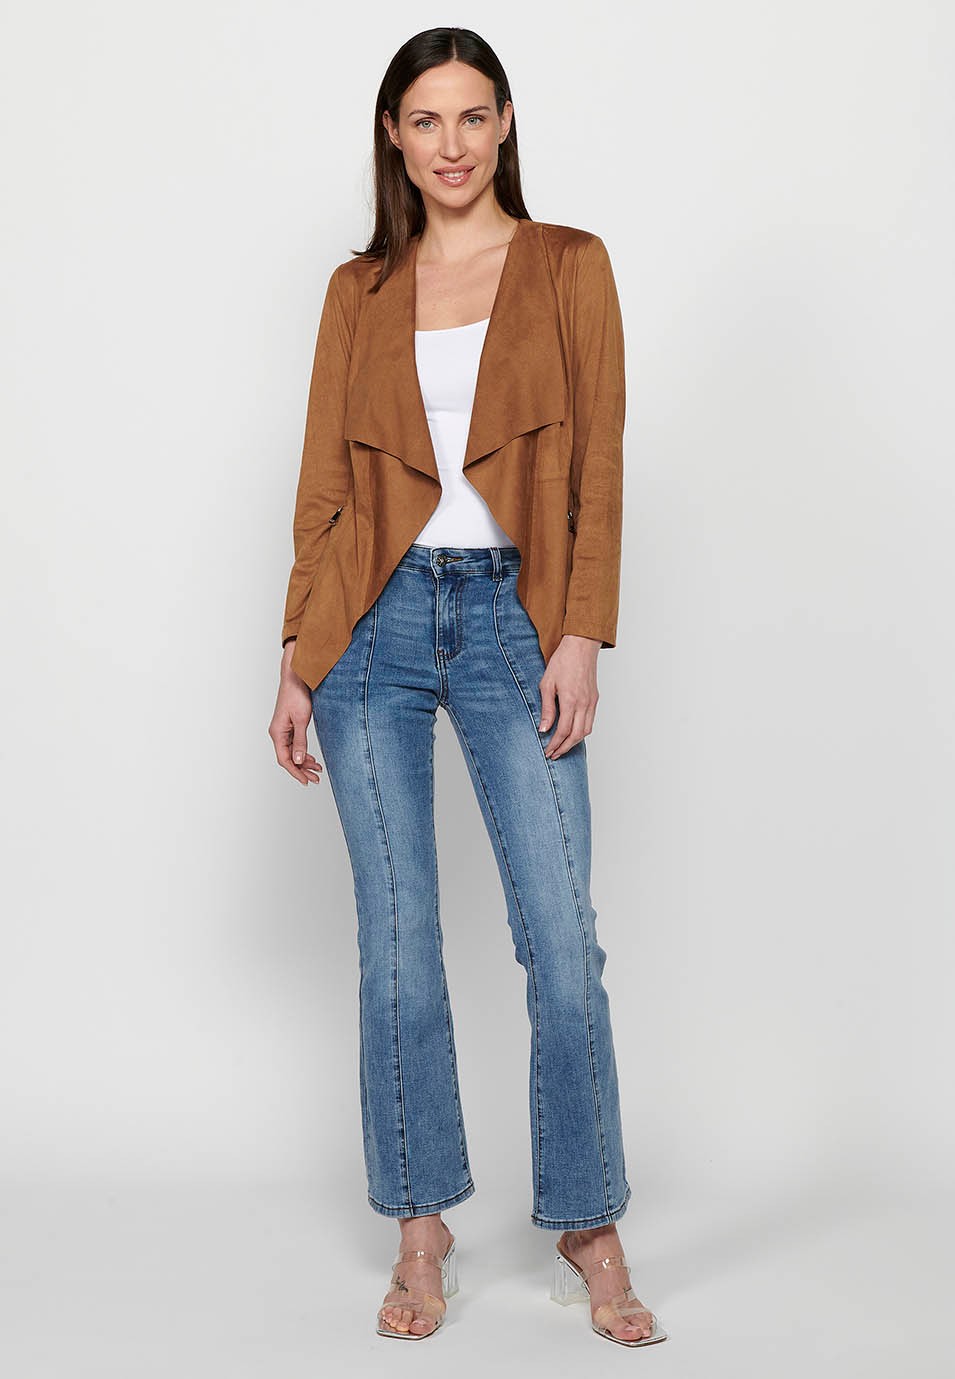 Tan Long Sleeve Asymmetrical Cut Loose Jacket for Women 7